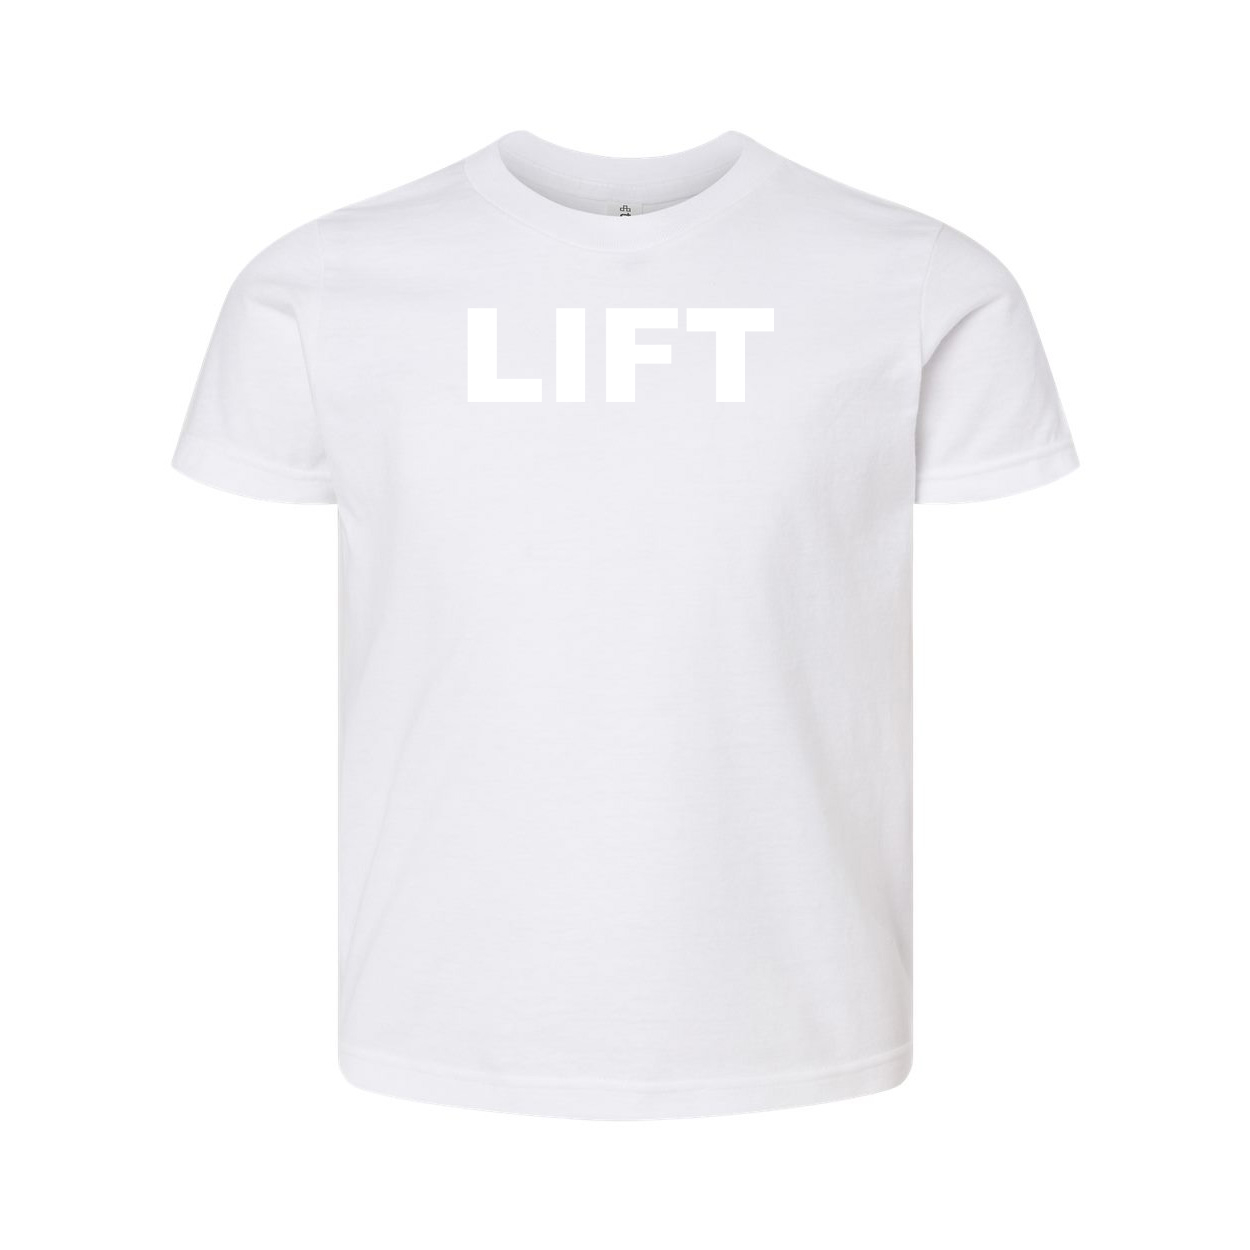 Lift Brand Logo Classic Youth T-Shirt White